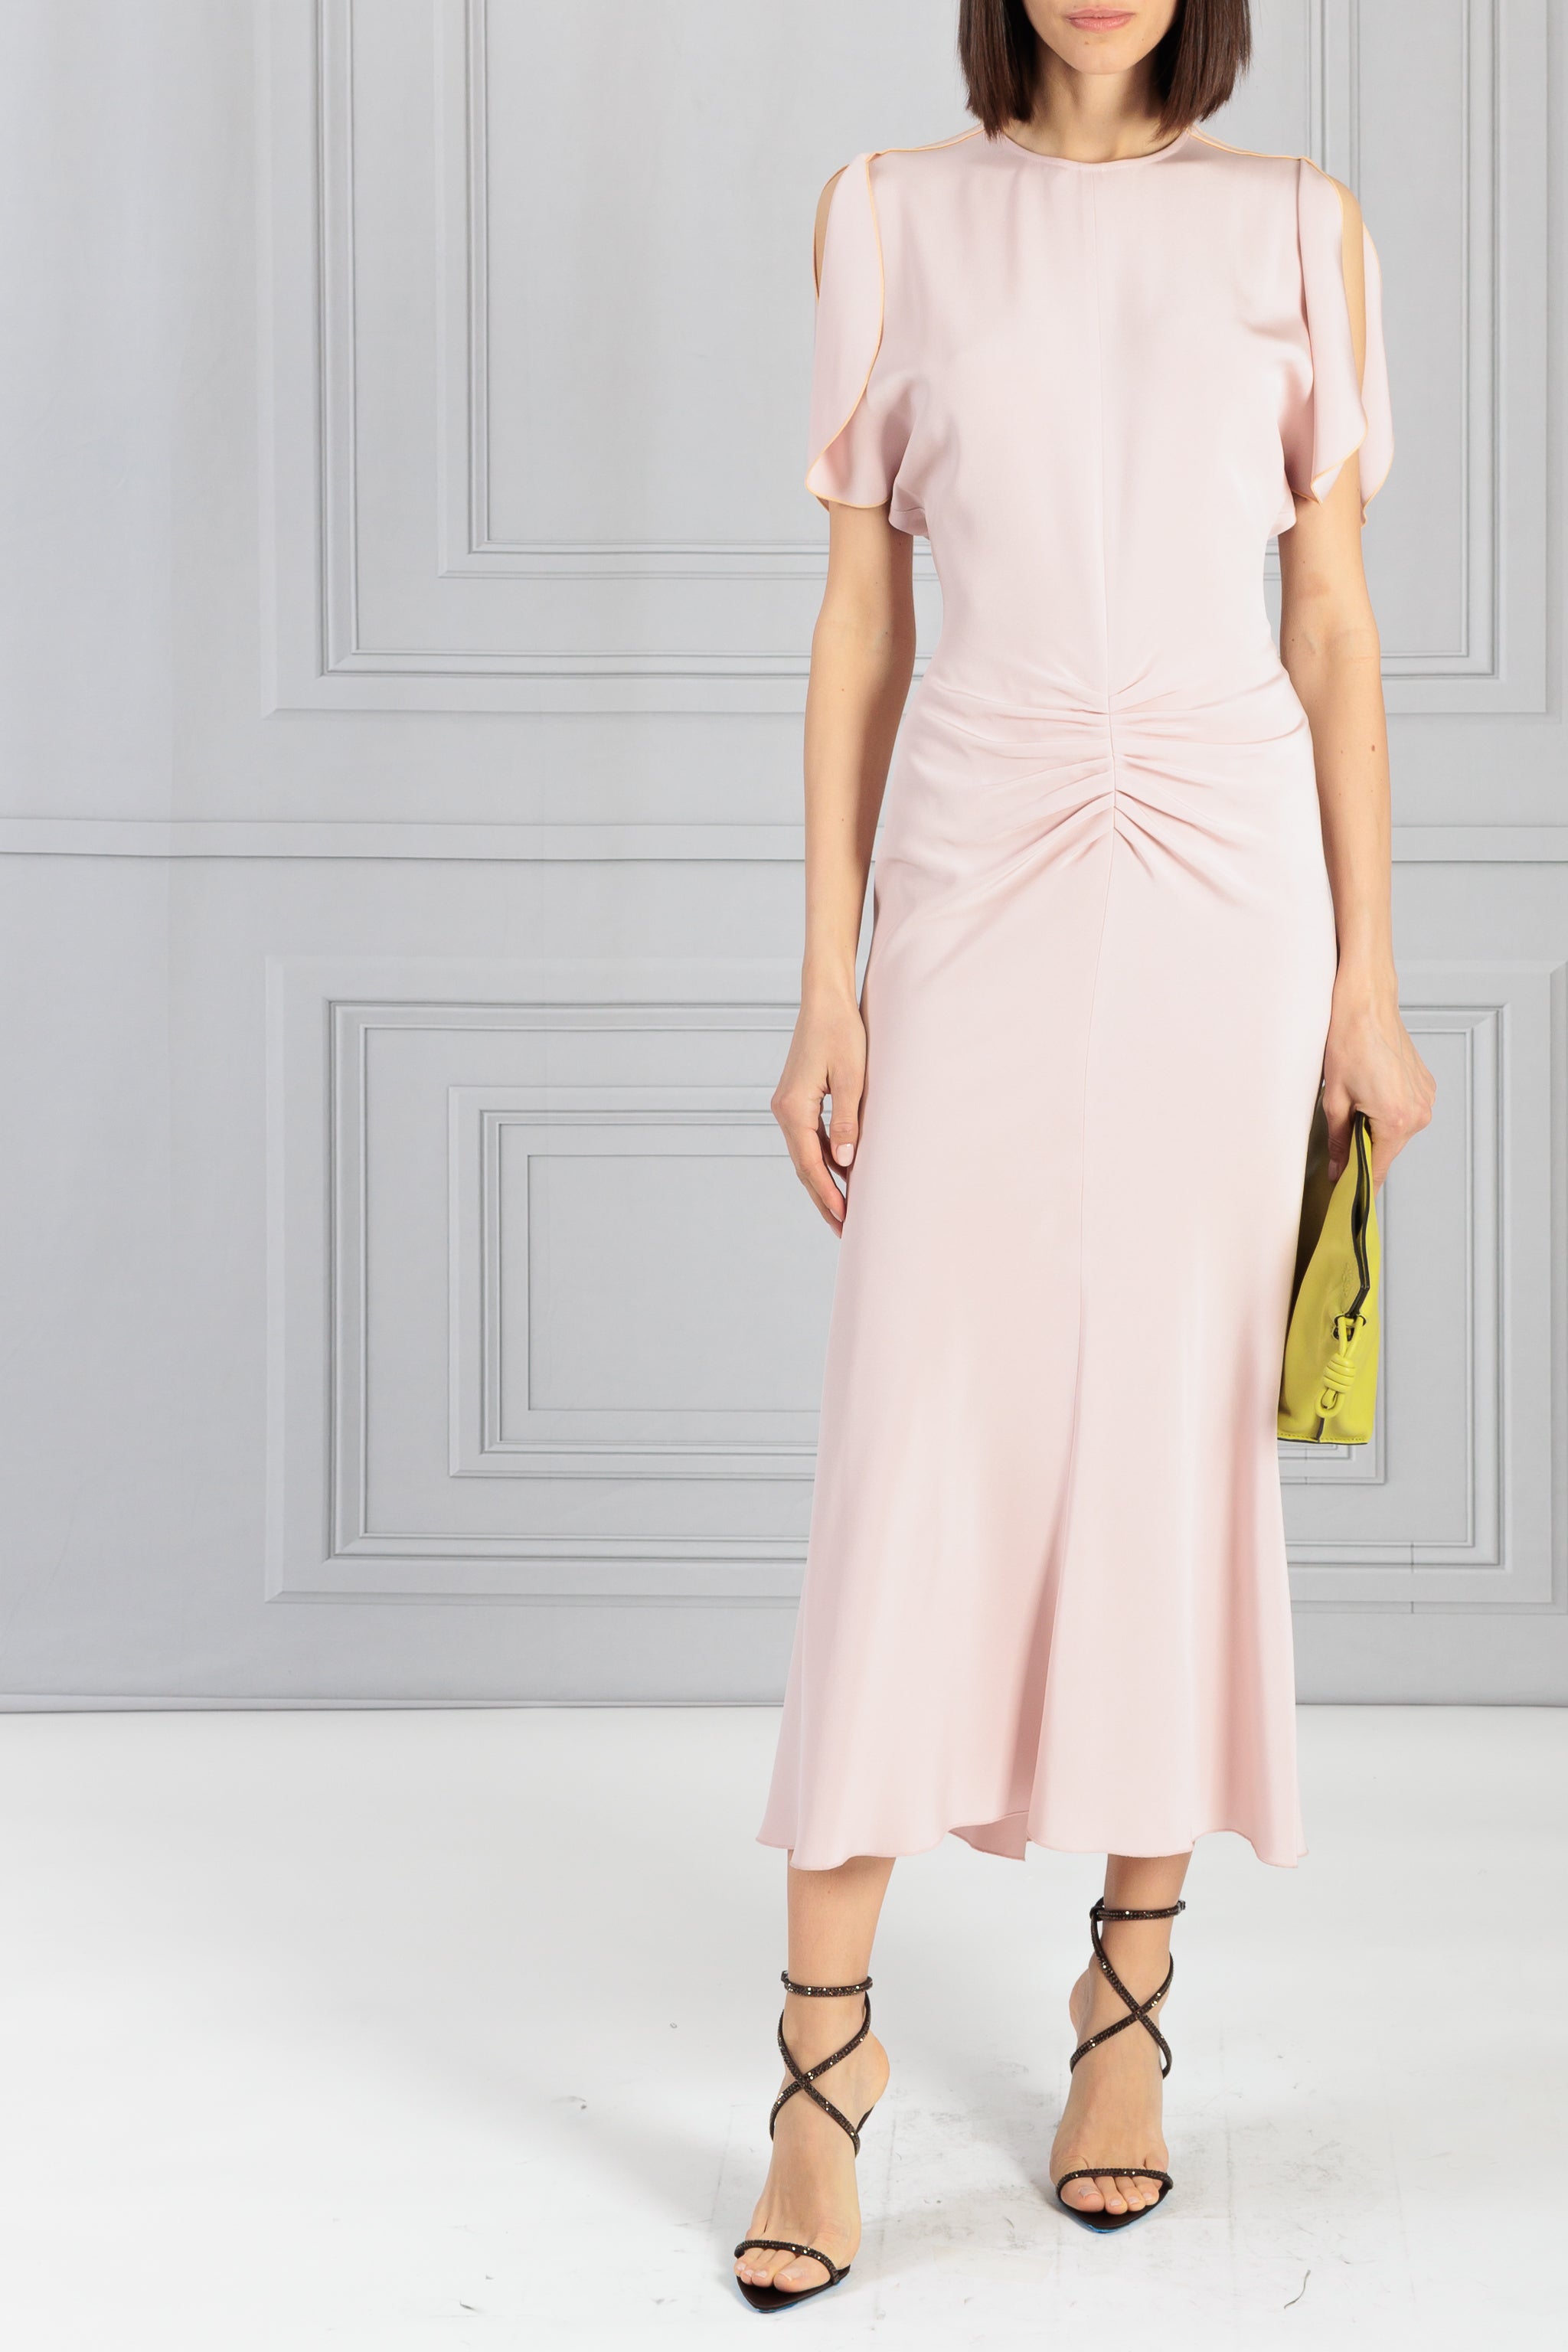 Victoria Beckham | Blush Gathered Waist Midi Dress